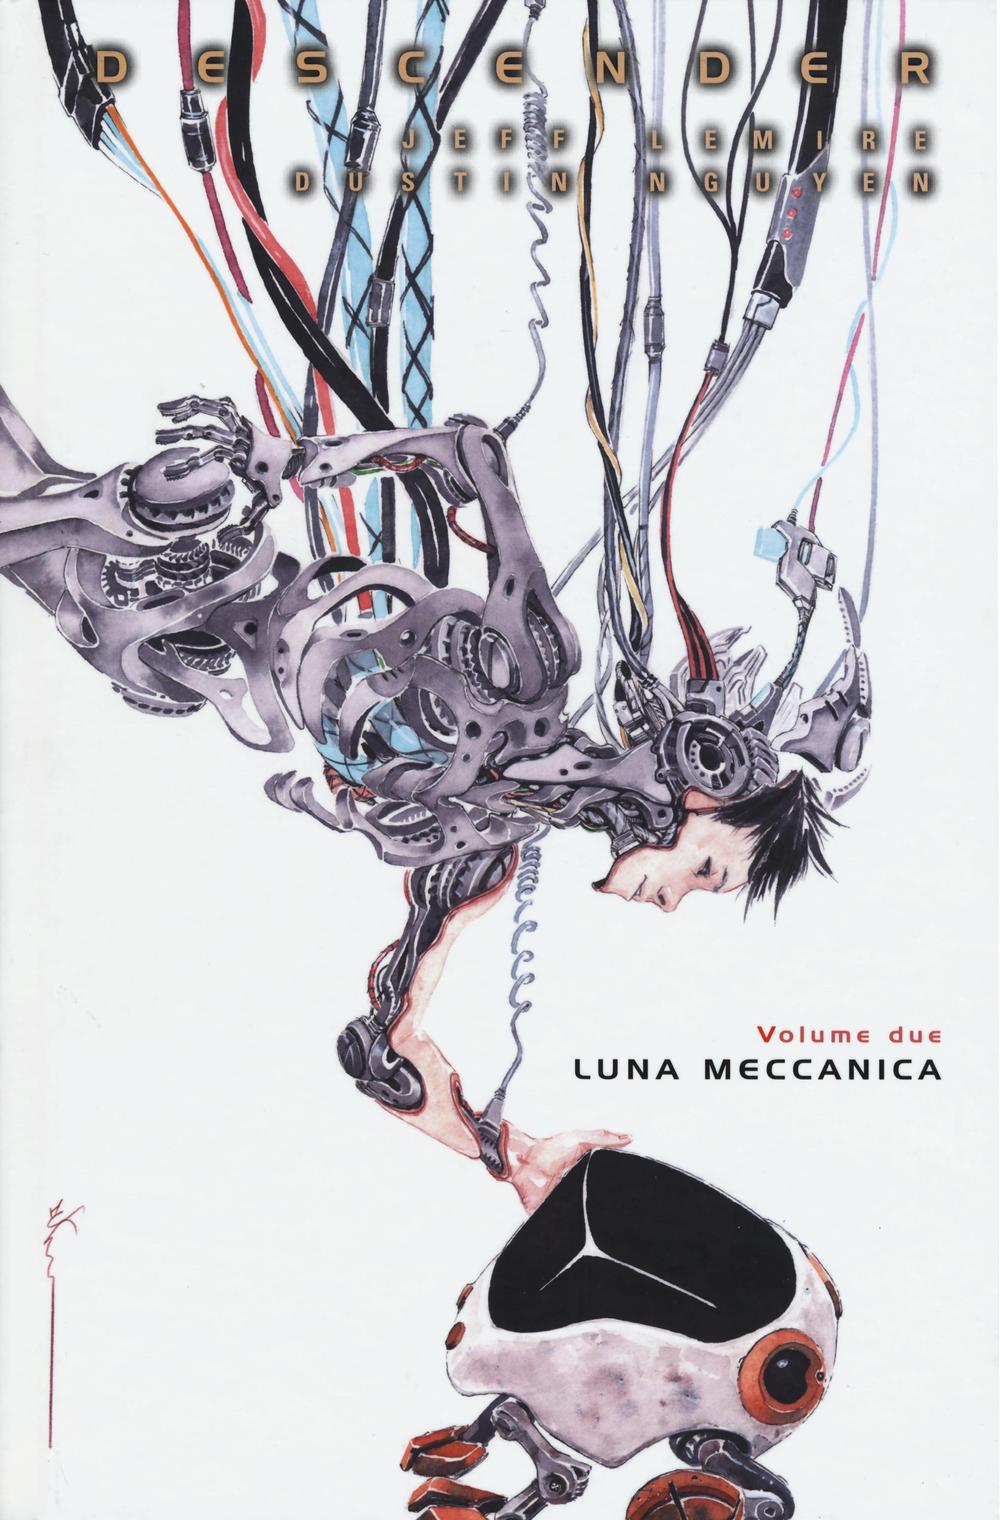 Descender #02 - Luna Meccanica